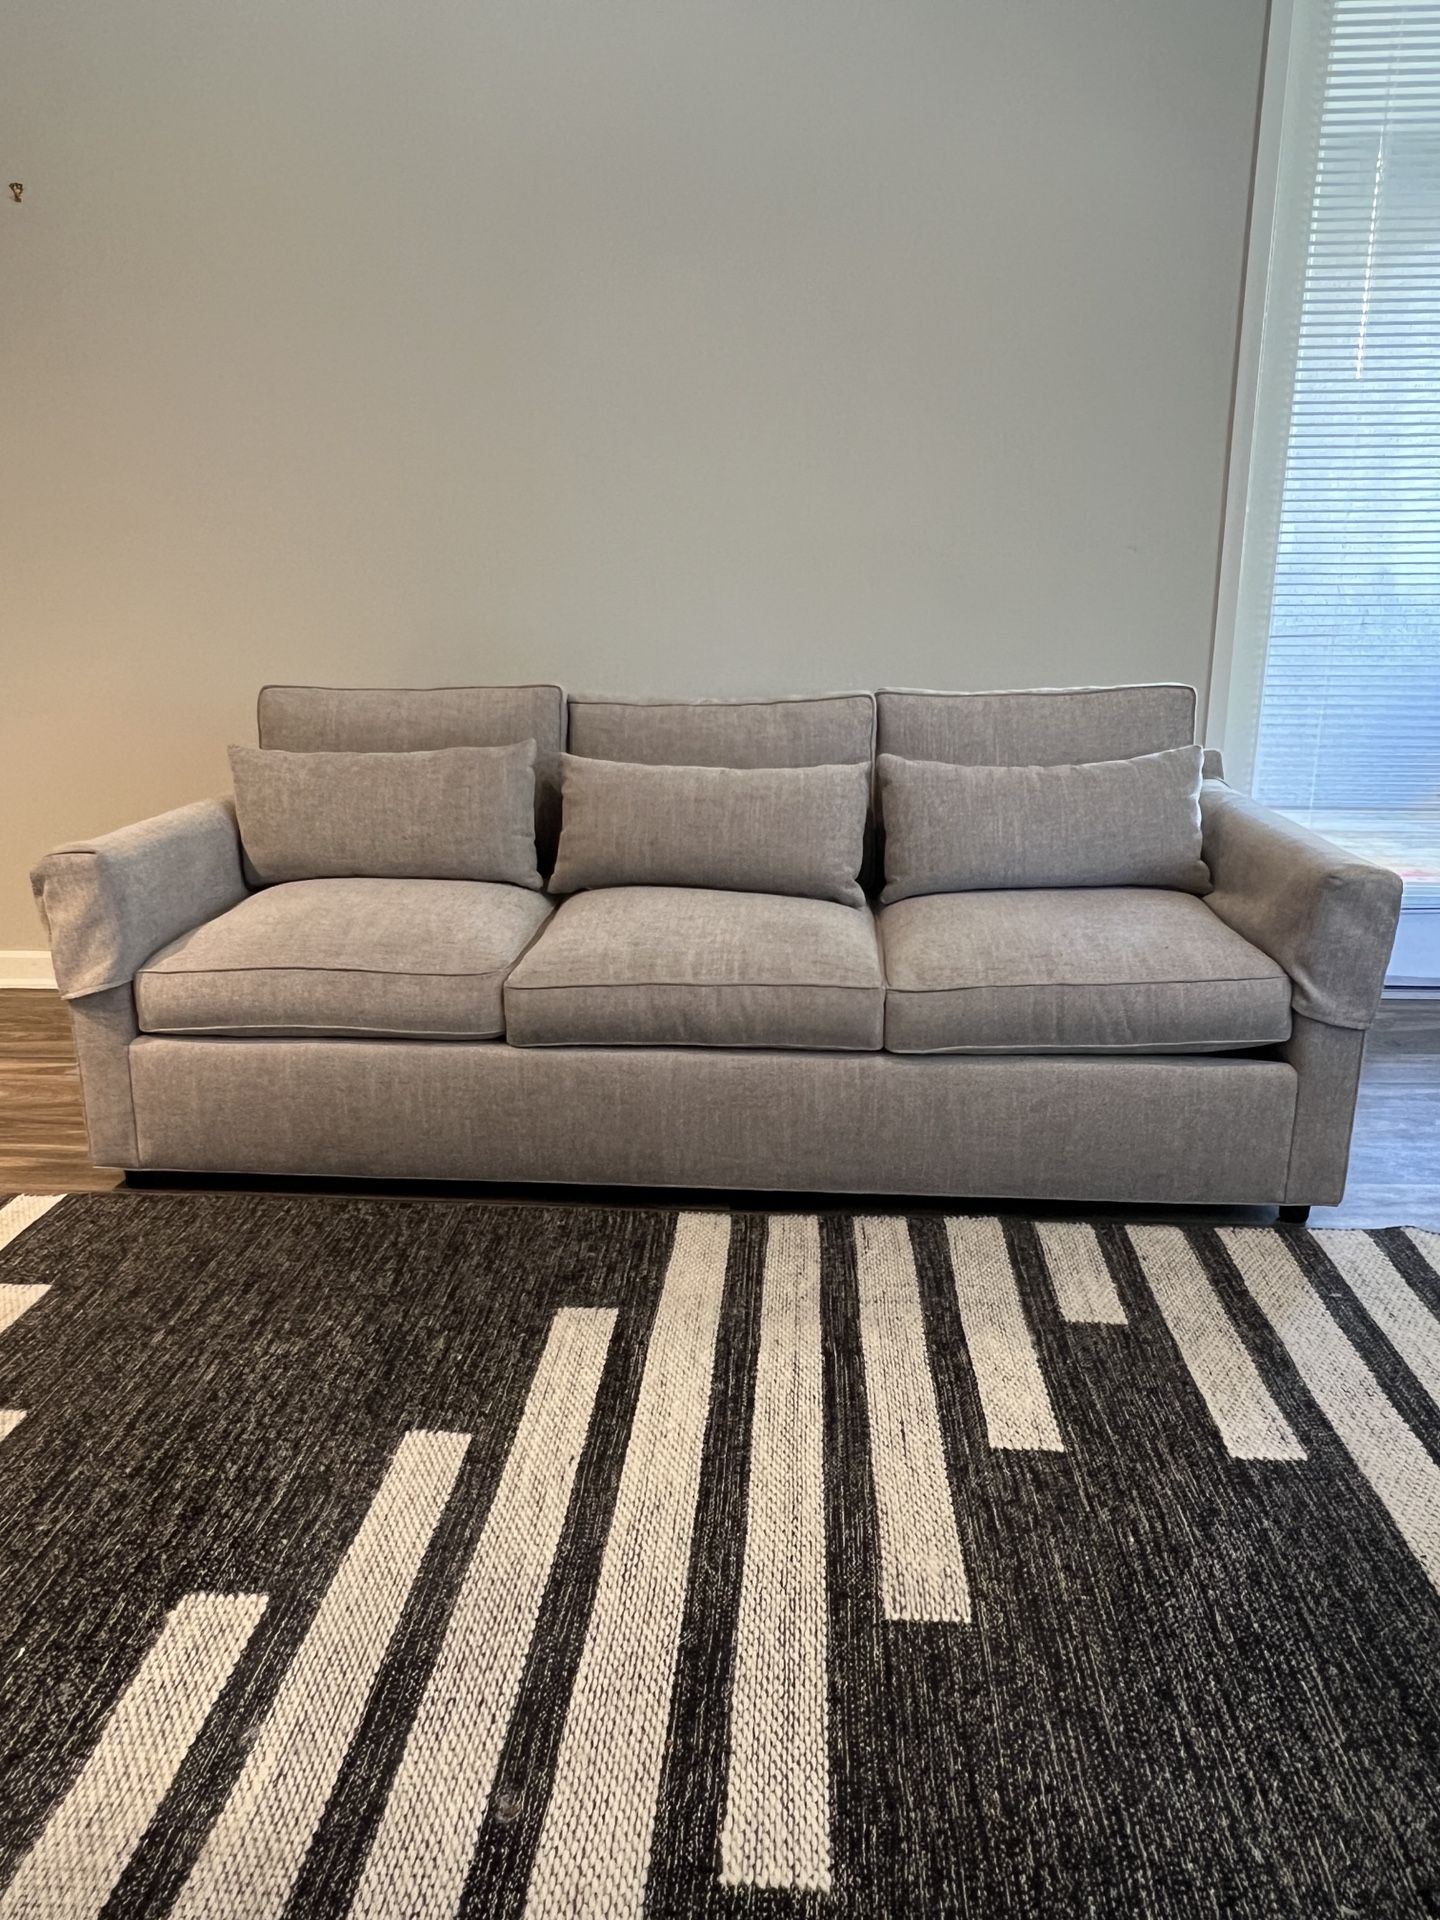 Comfortable Custom Made Sofa